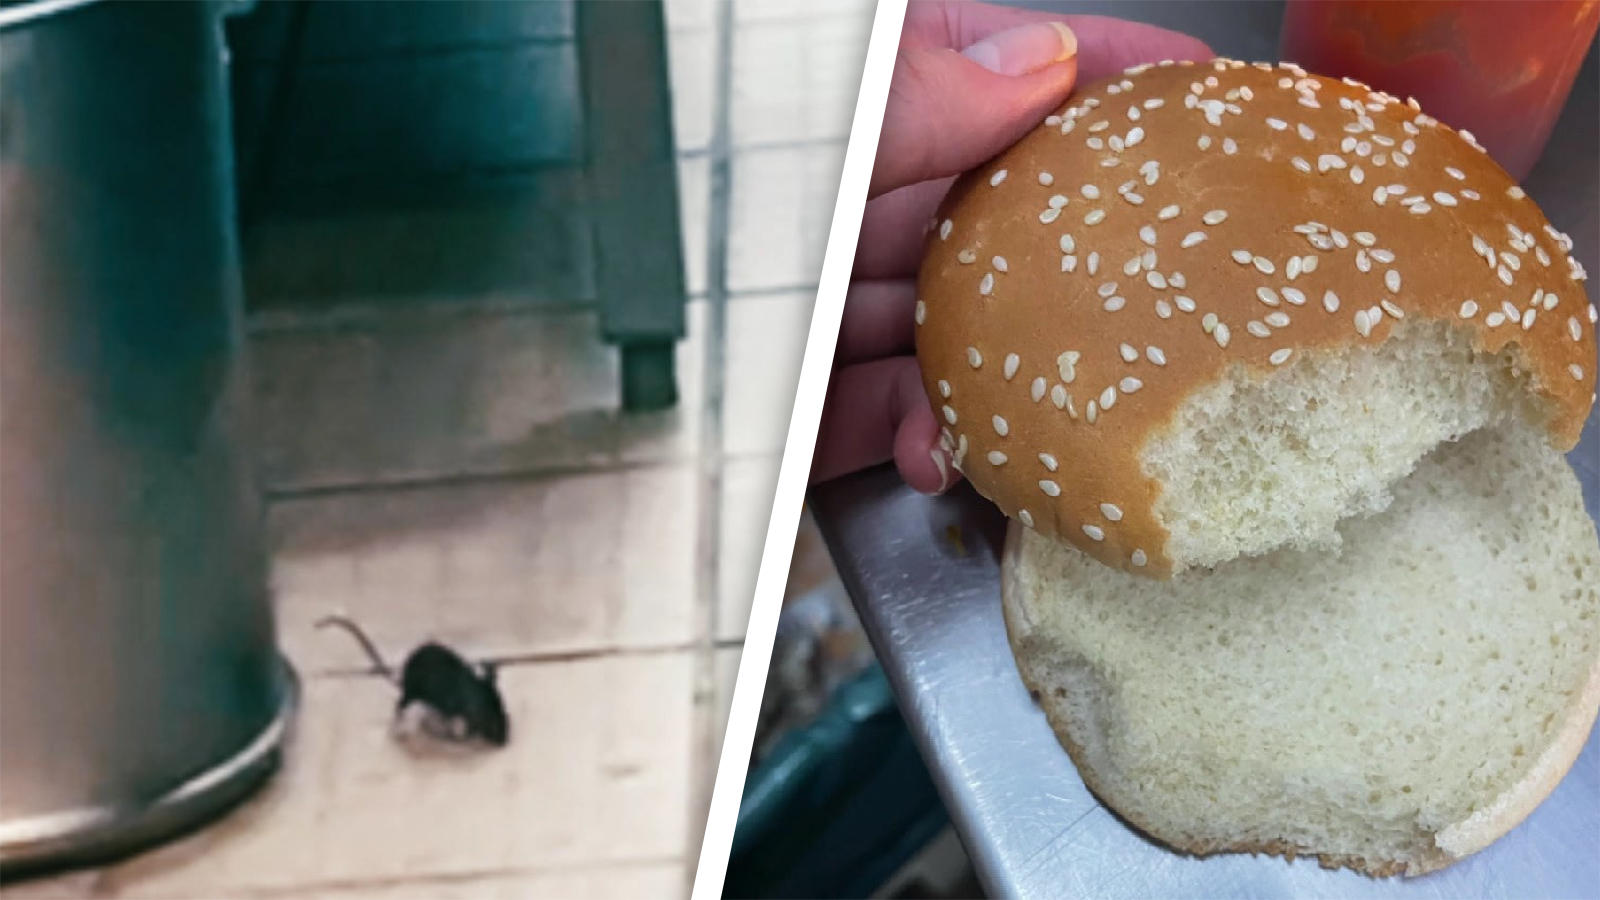 "Team Wallraff" entdeckt Mäuse bei Burger King Angefressene Brötchen, massenweise Kot